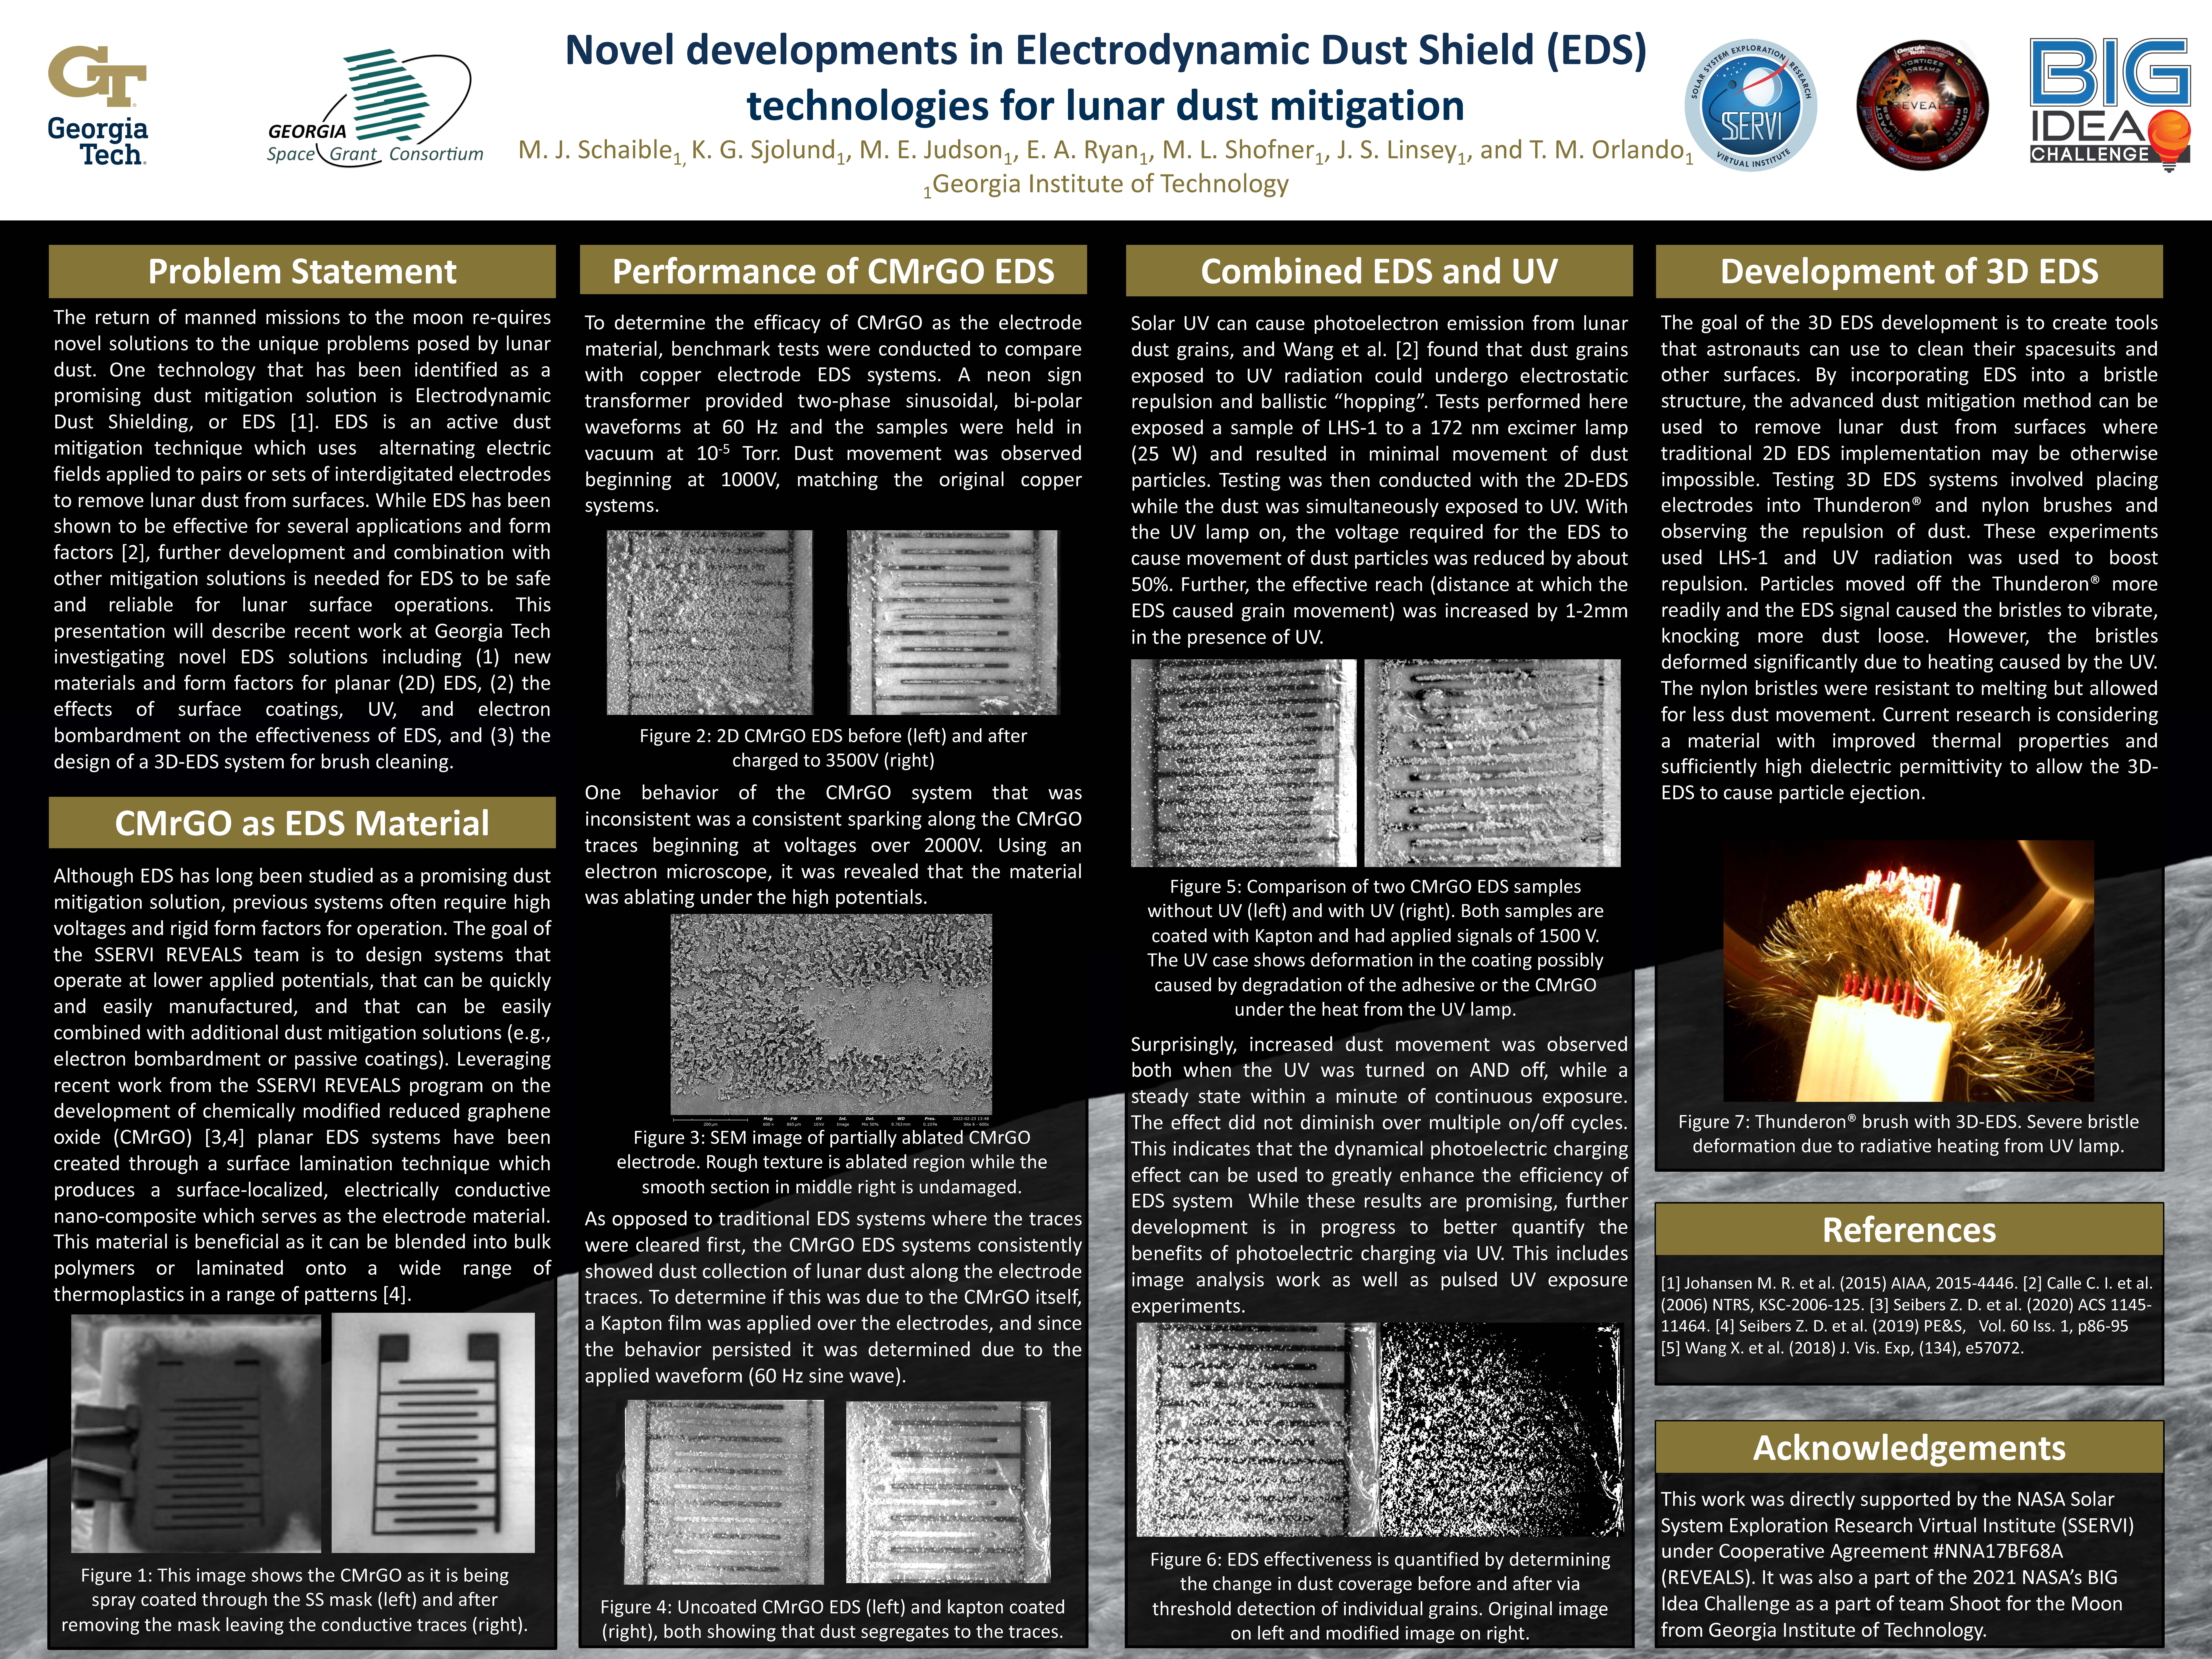 Novel developments in Electrodynamic Dust Shield (EDS) technologies for lunar dust mitigation